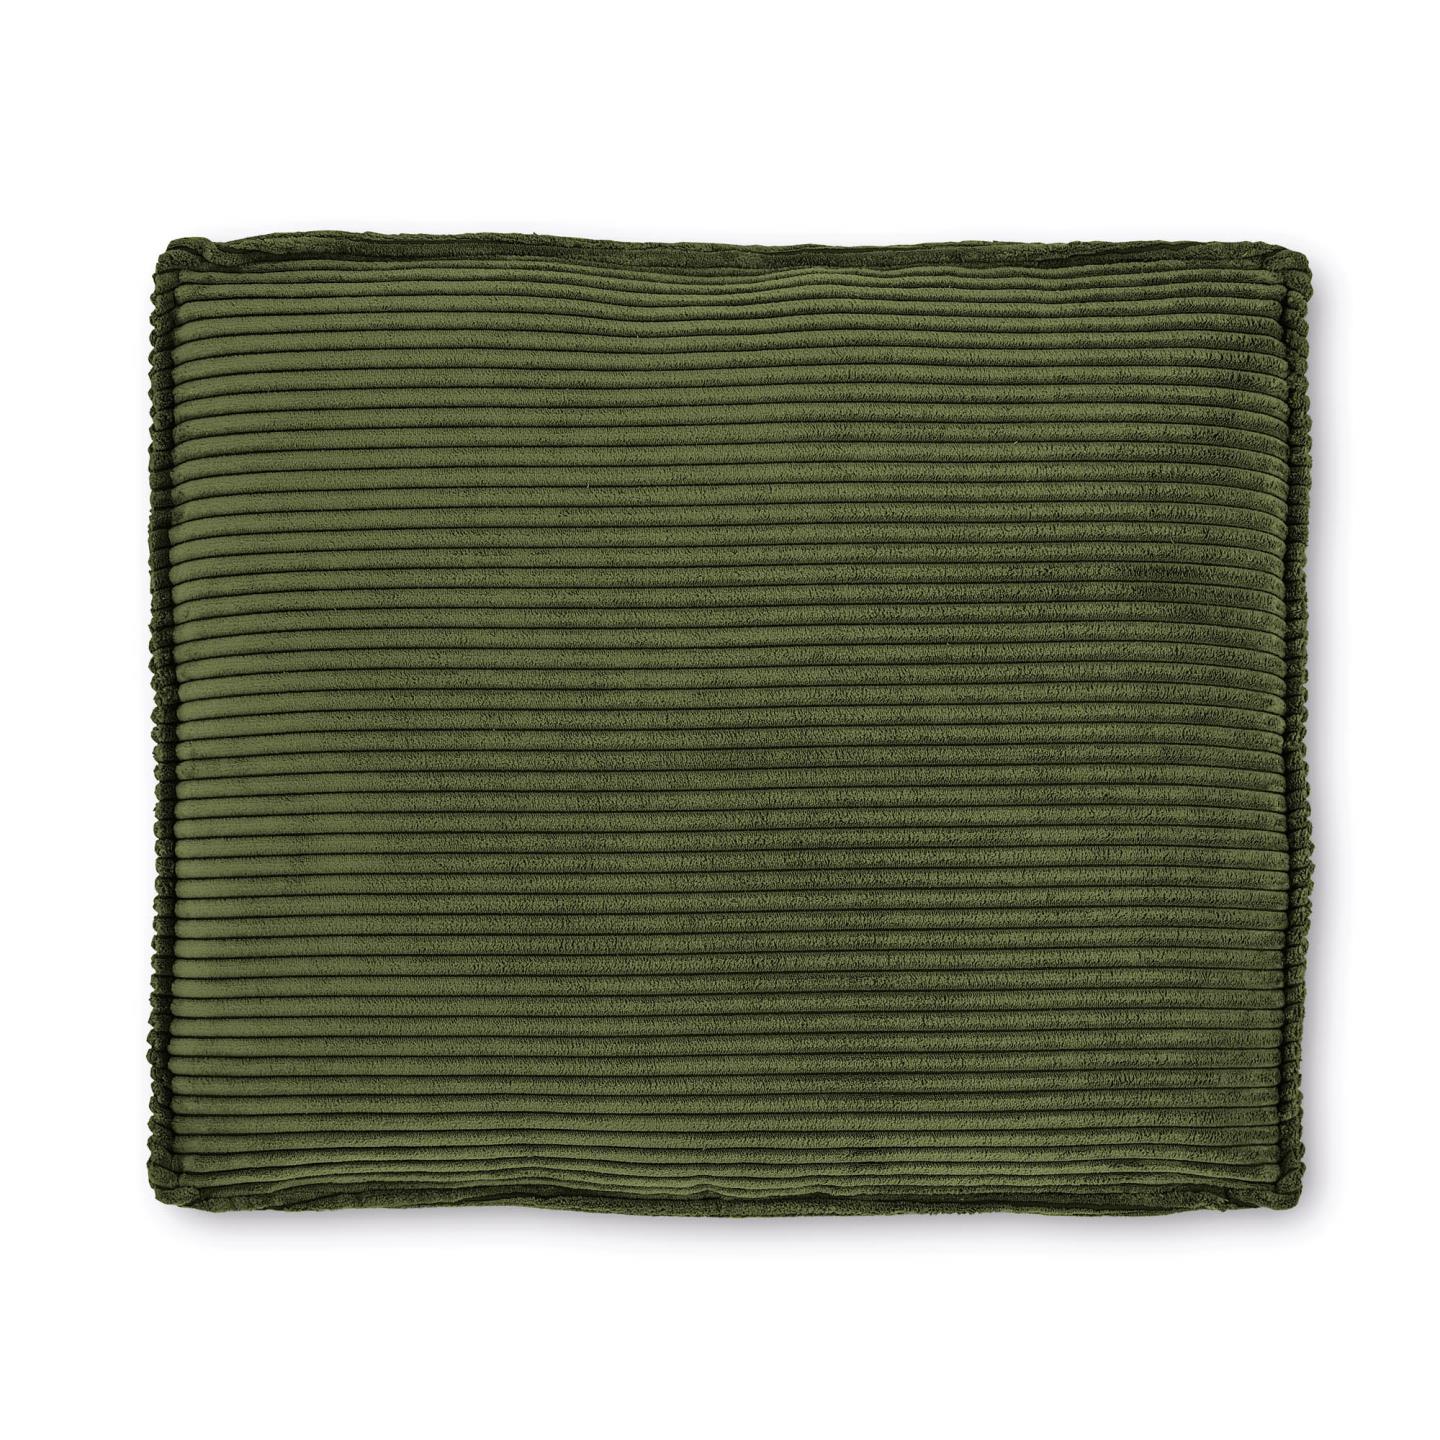 Blok cushion in green wide seam corduroy, 50 x 60 cm